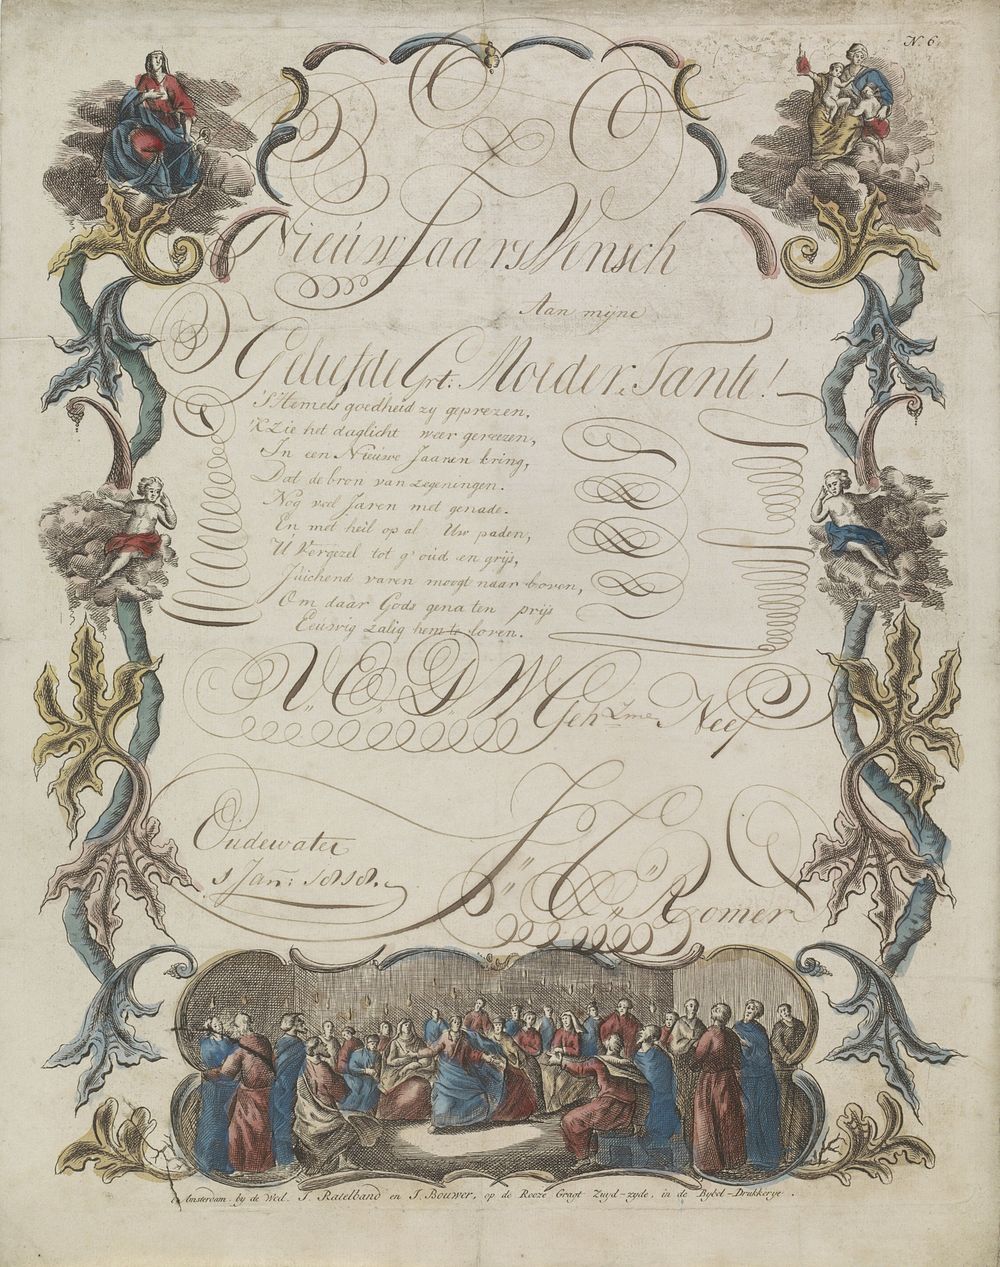 Wensbrief met Pinkstertafereel (1818) by weduwe Jeronimus Ratelband en Johannes Bouwer and anonymous